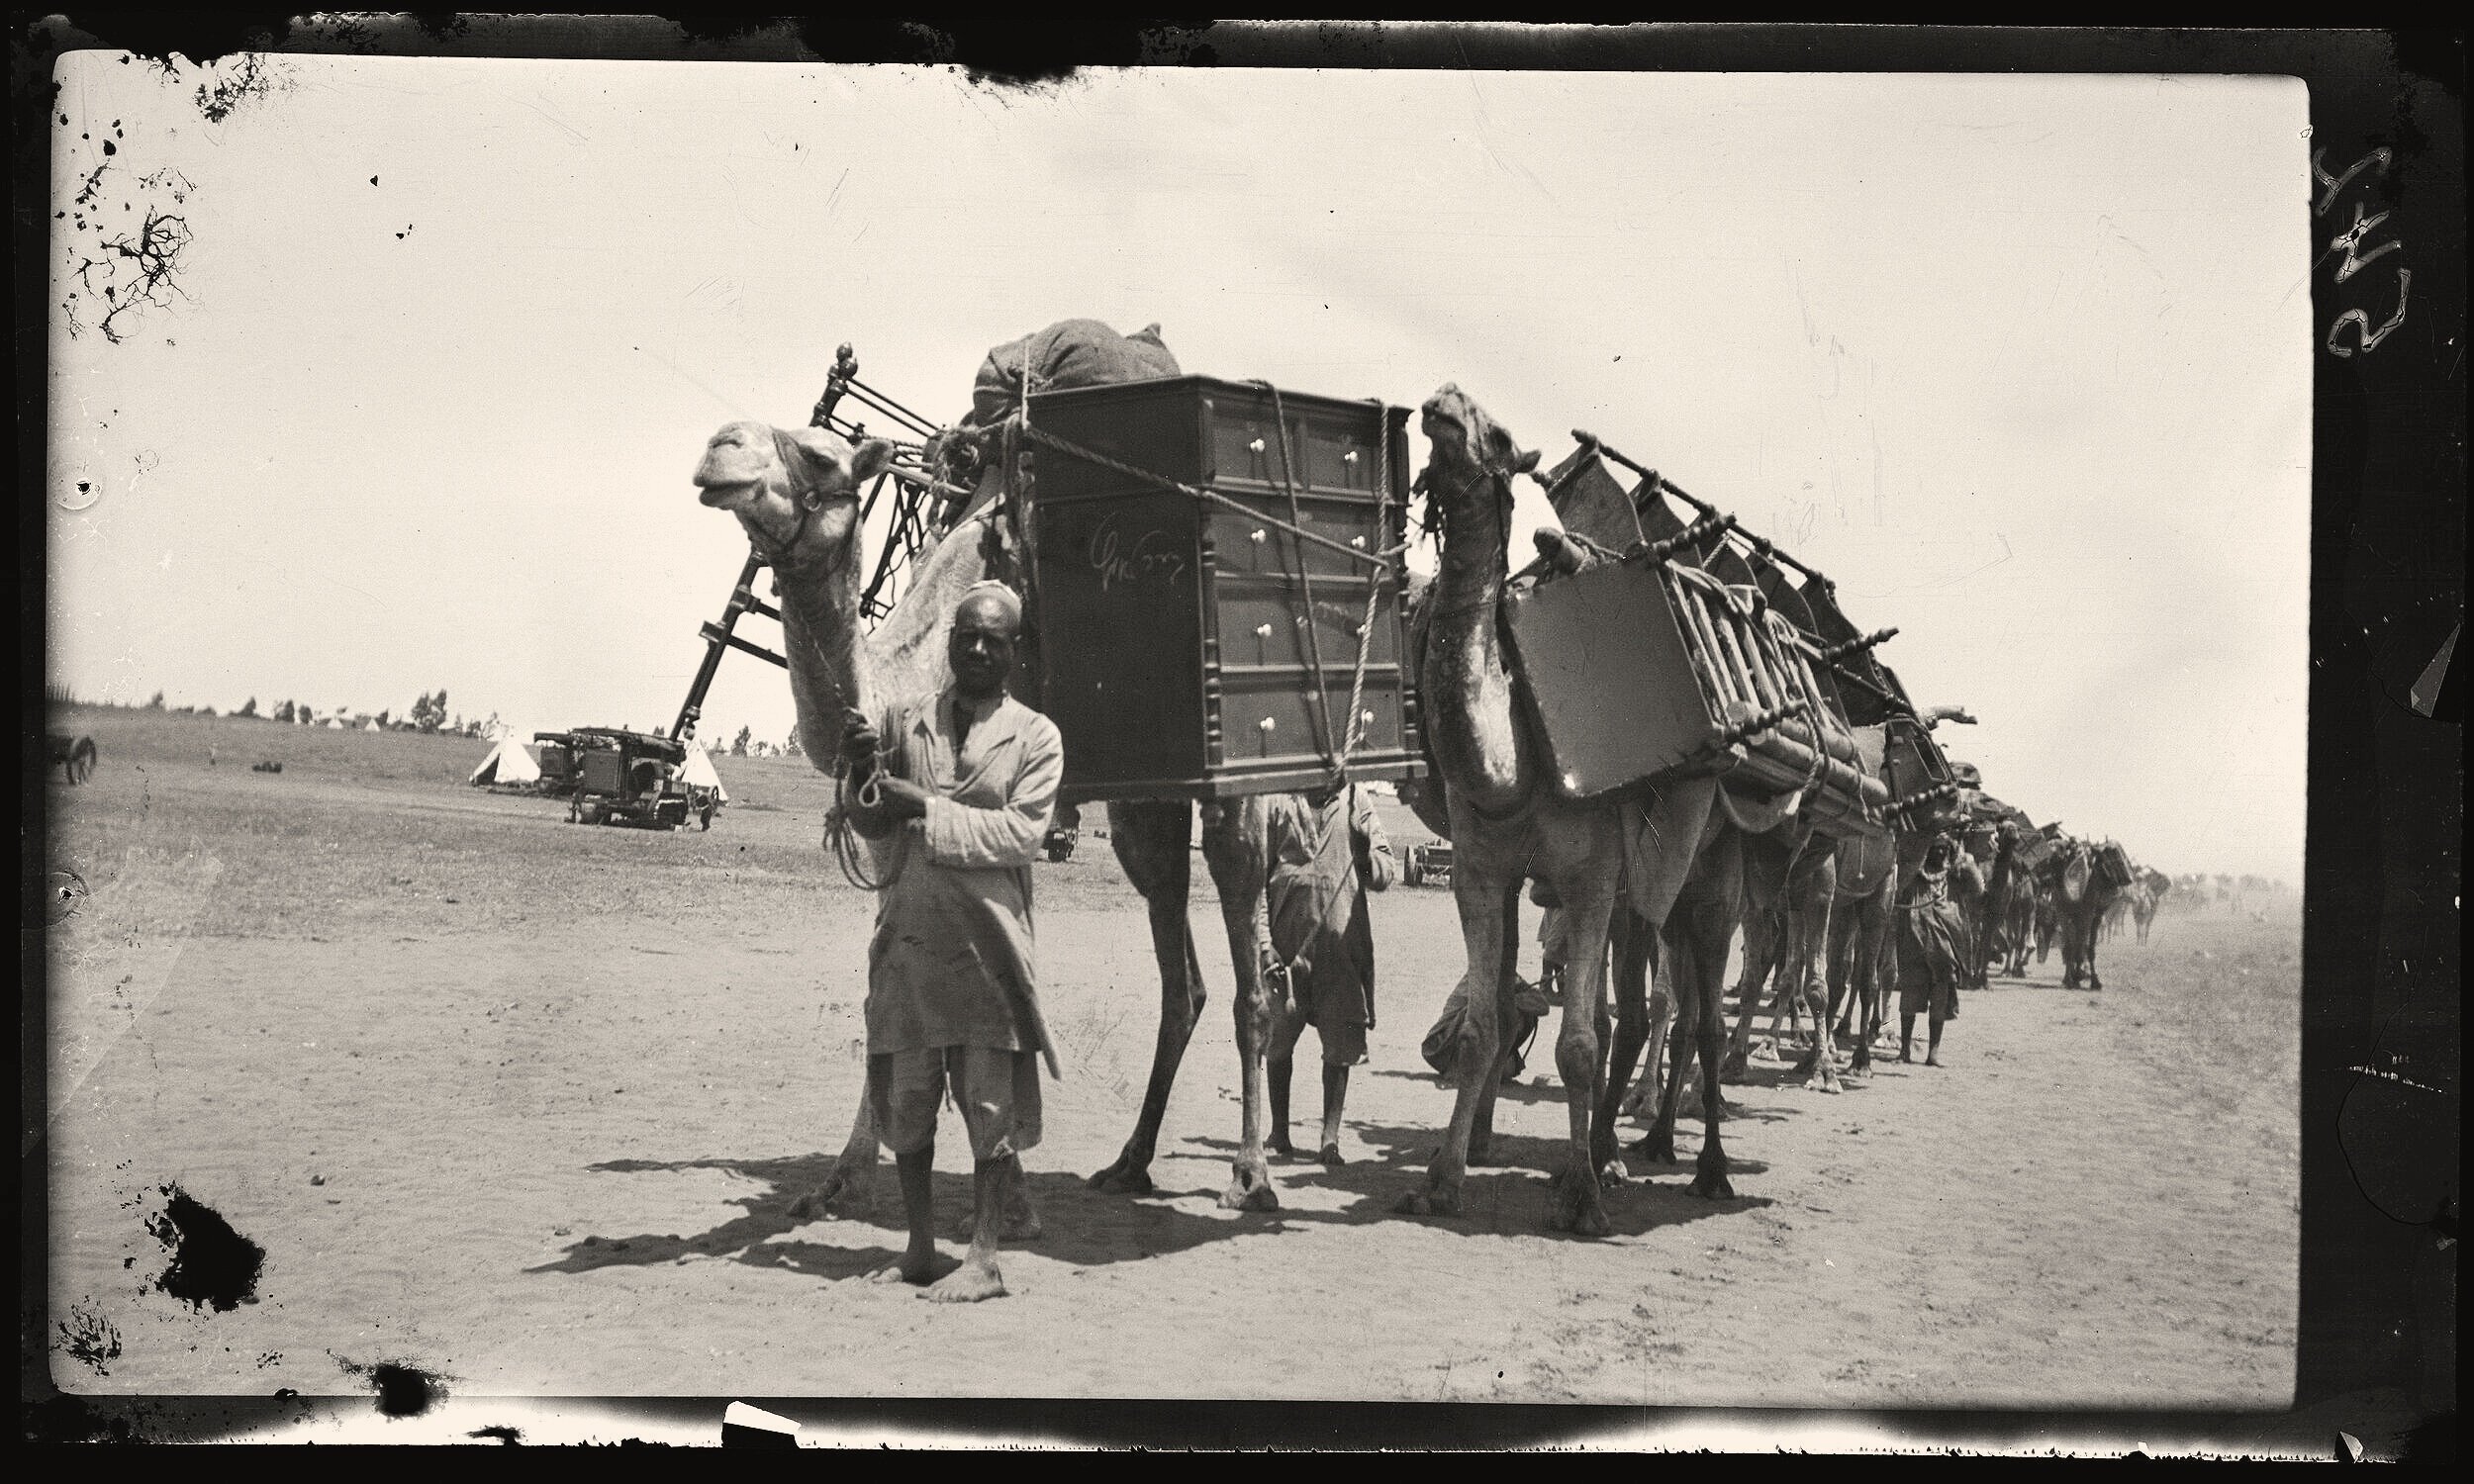 Camel Caravan - Sinai Desert